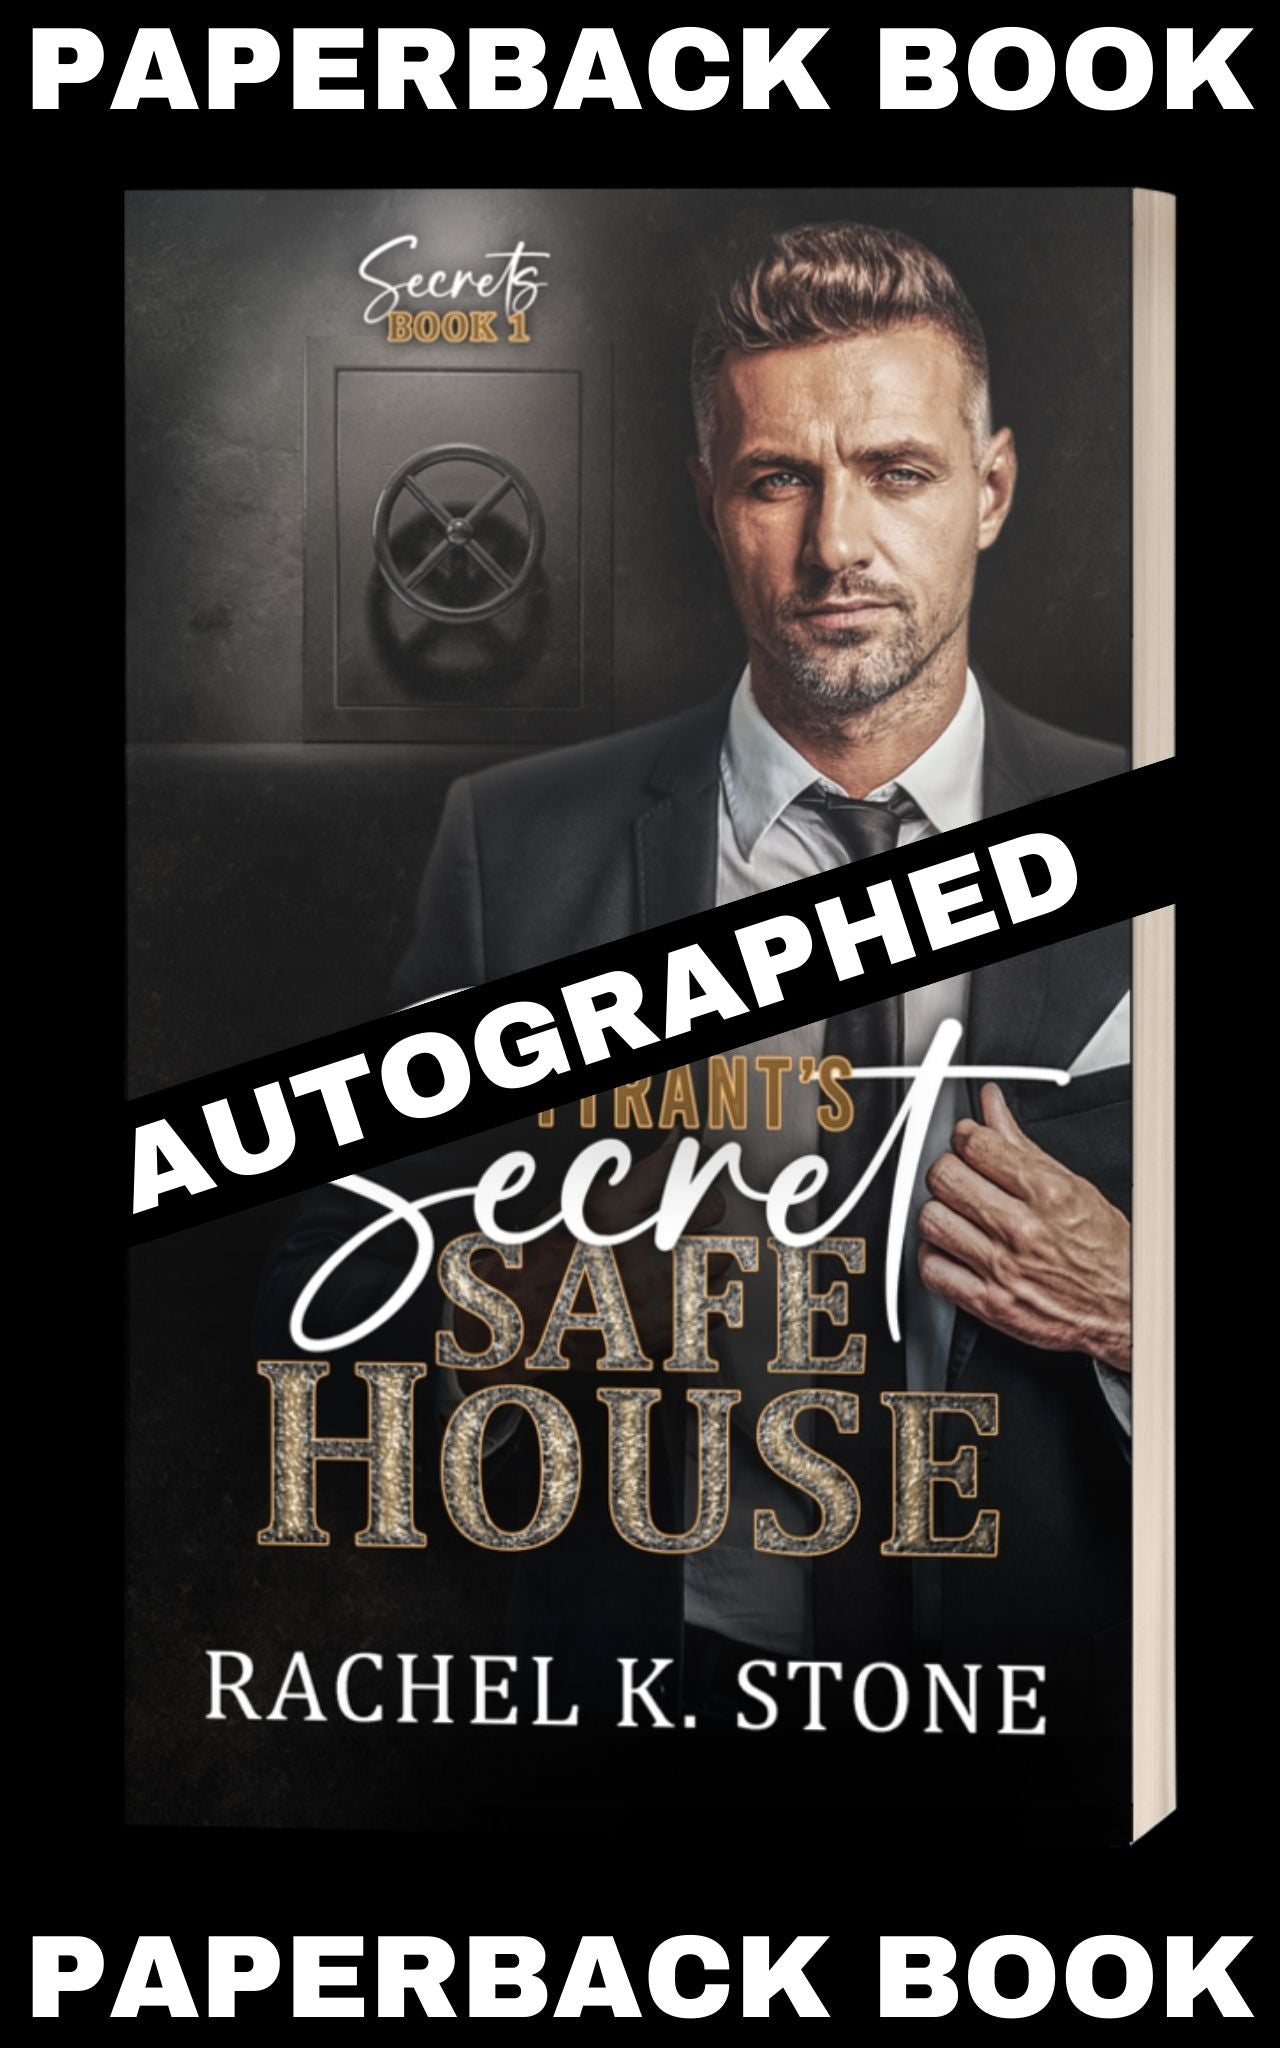 The Tyrant's Secret Safe House: Bad Boy Billionaire, Enemies to Lovers Adult Romance (Secrets Series, Book 1)